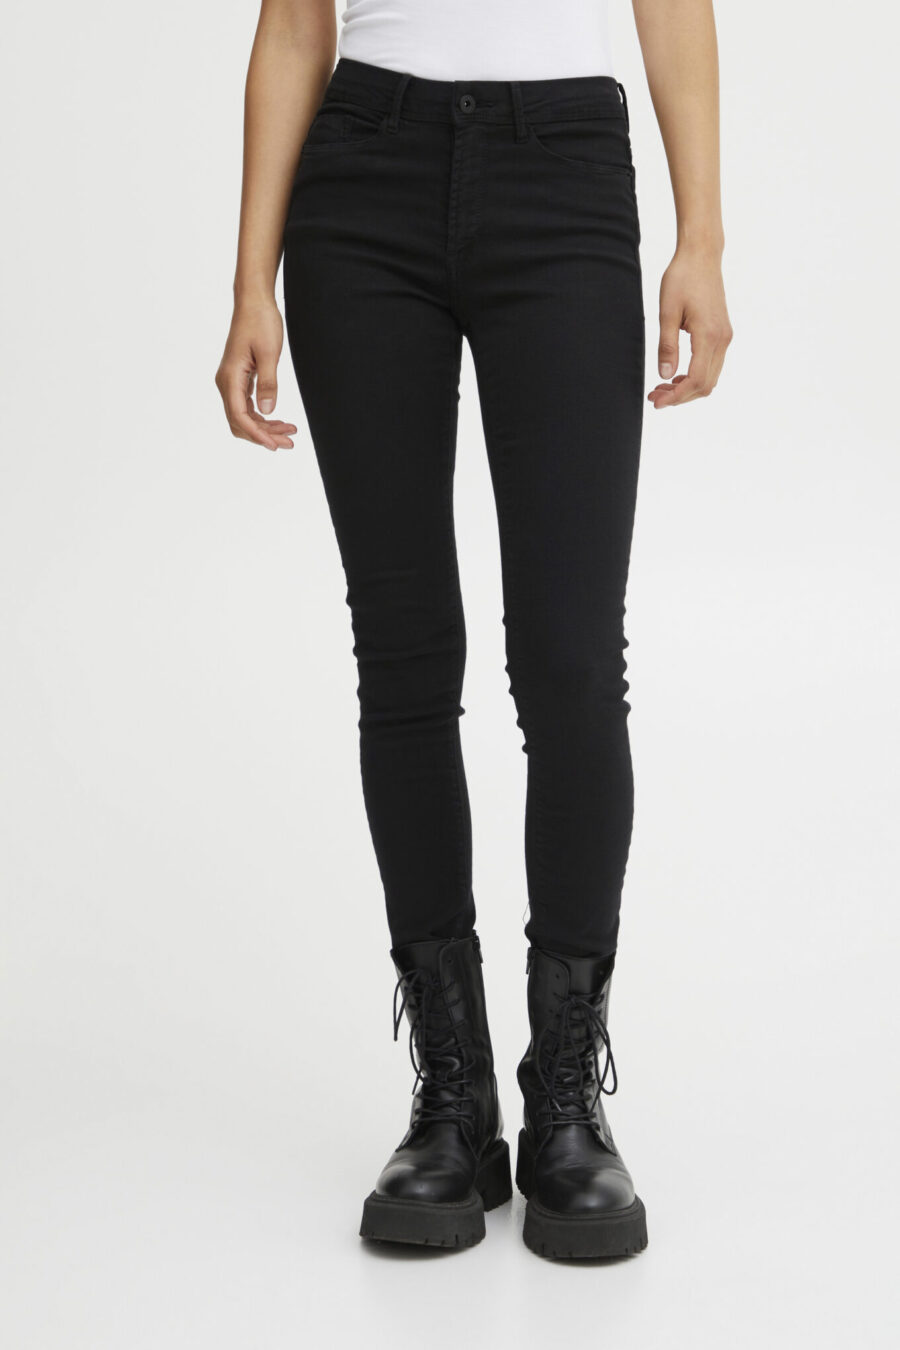 ICHI Erin izaro pants BLACK jeans skinny fit stretch designer premium